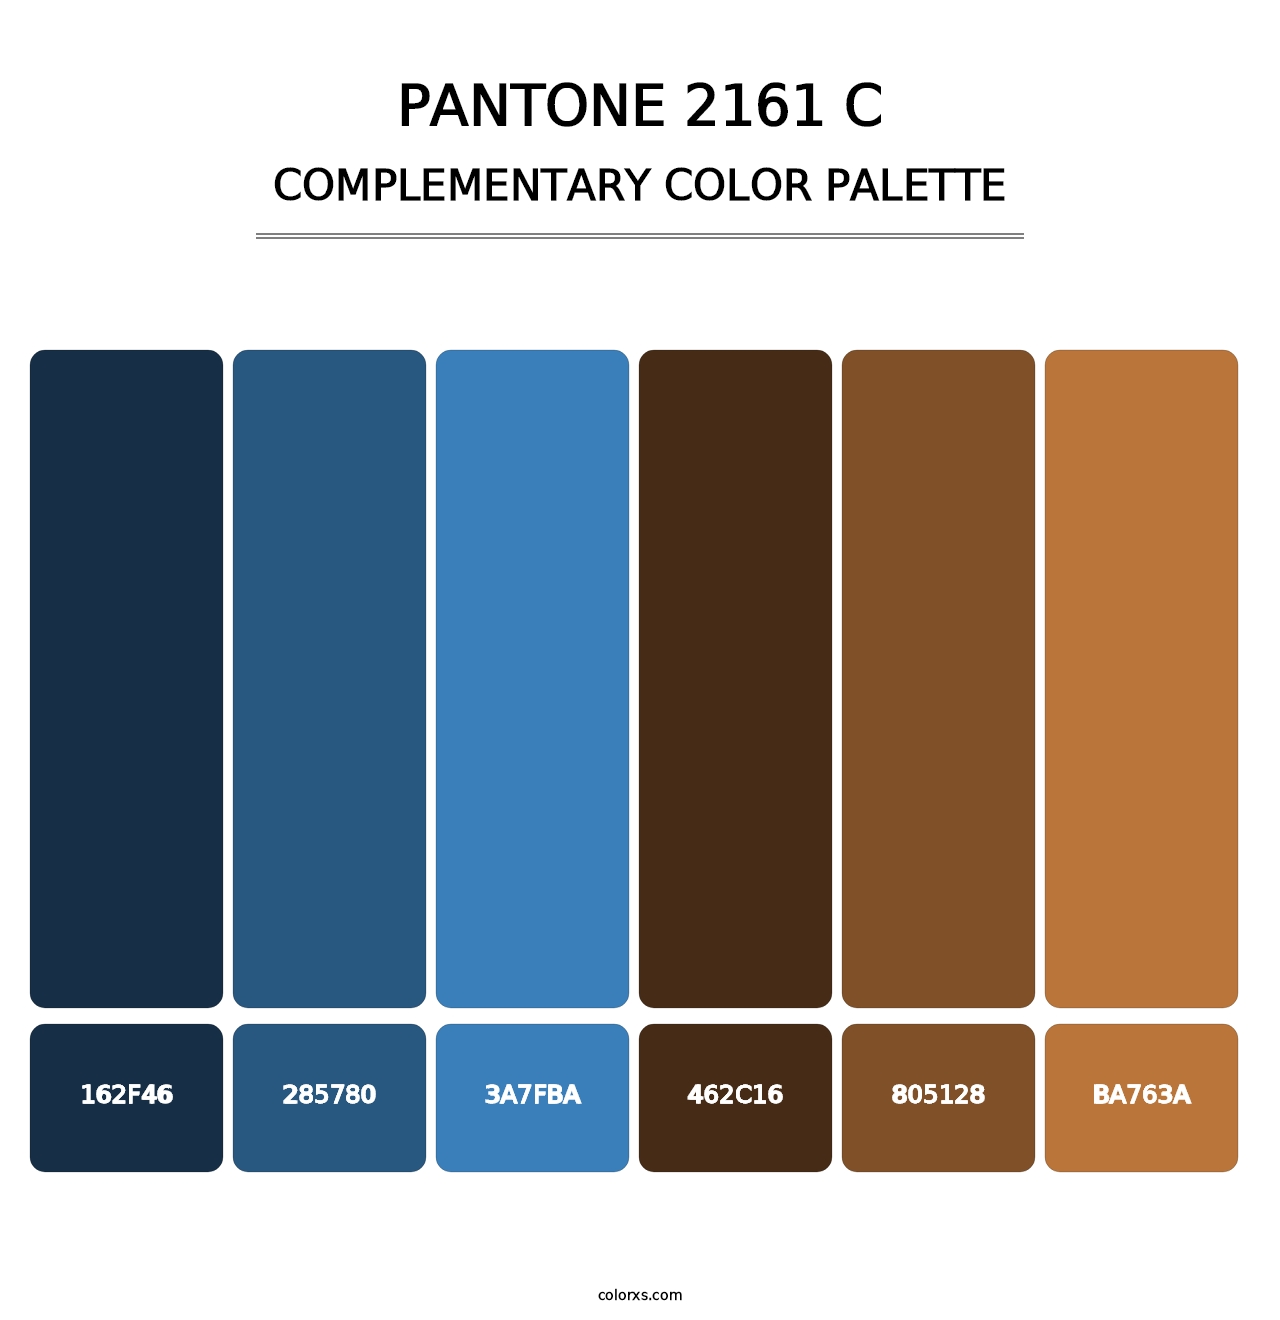 PANTONE 2161 C - Complementary Color Palette